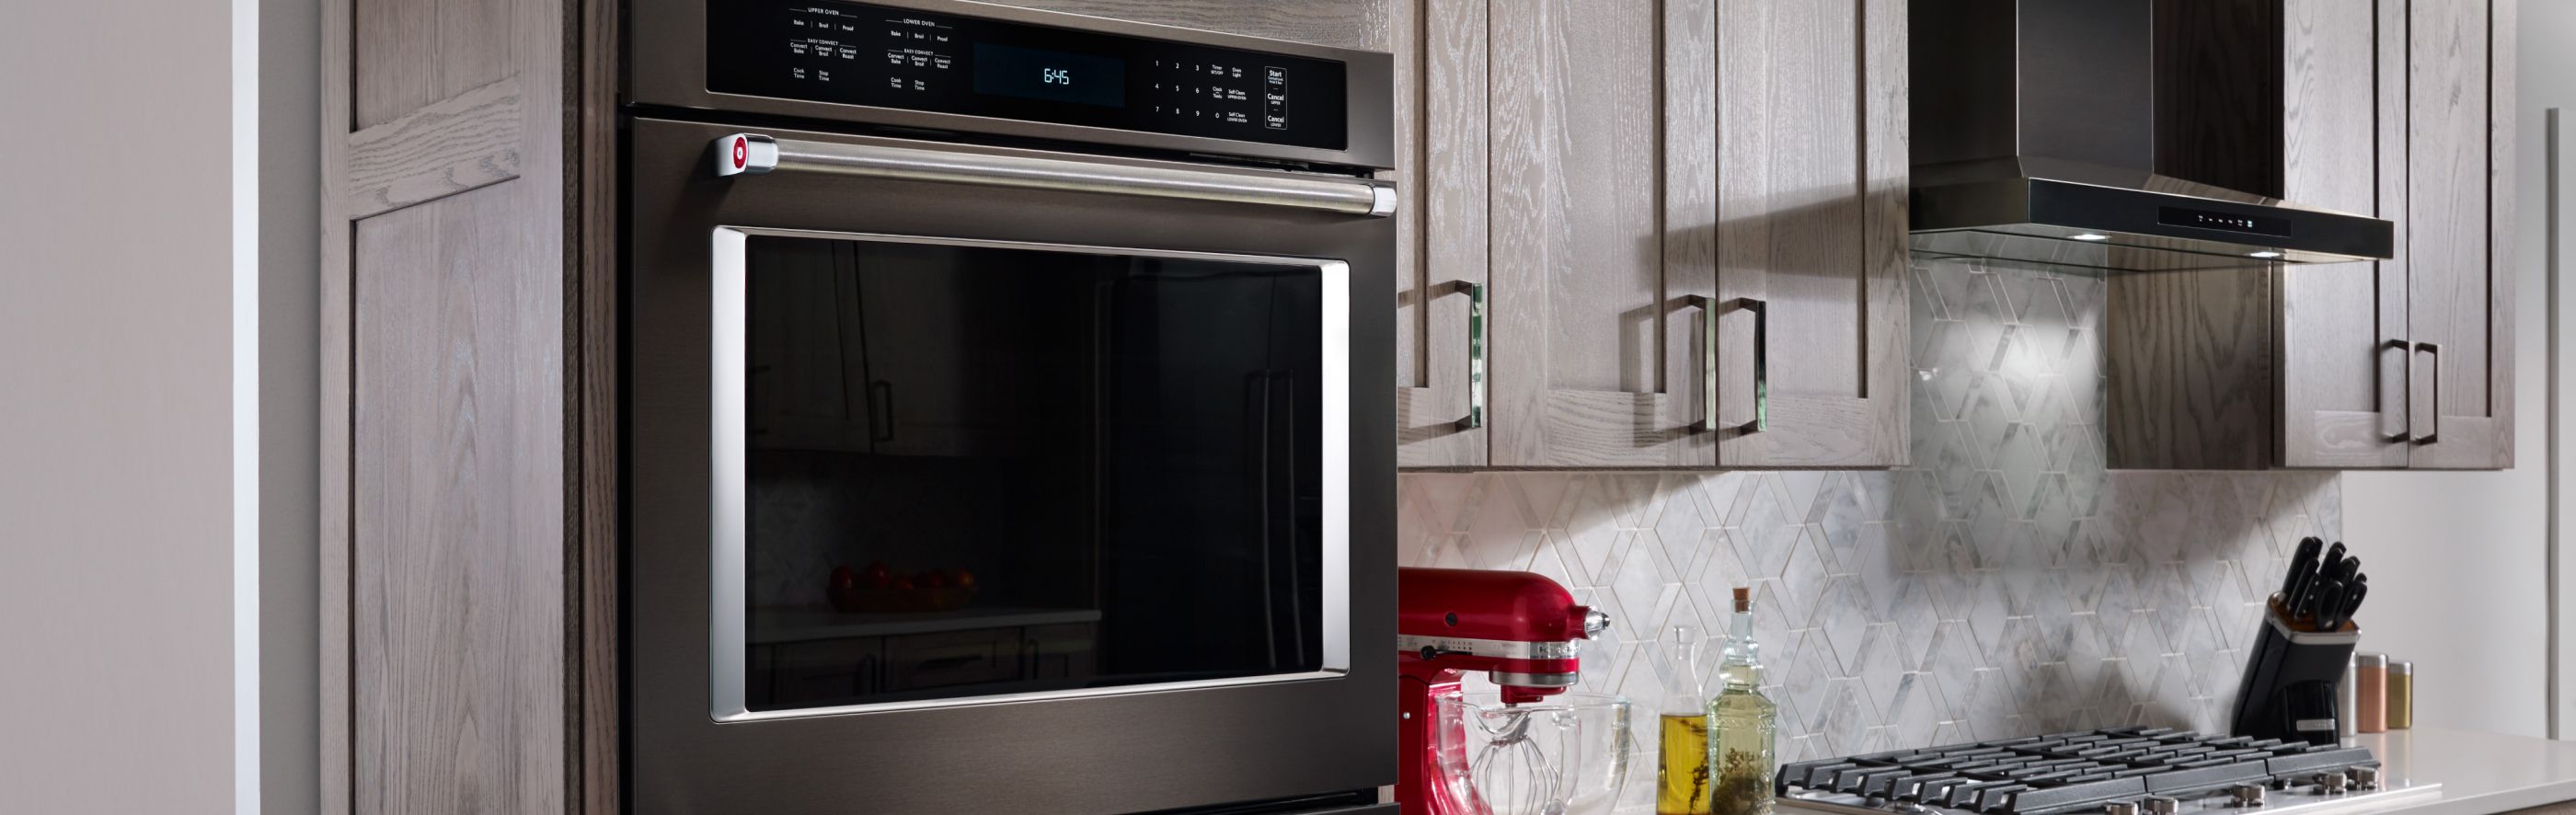 KitchenAid® Wall Oven in a modern kitchen